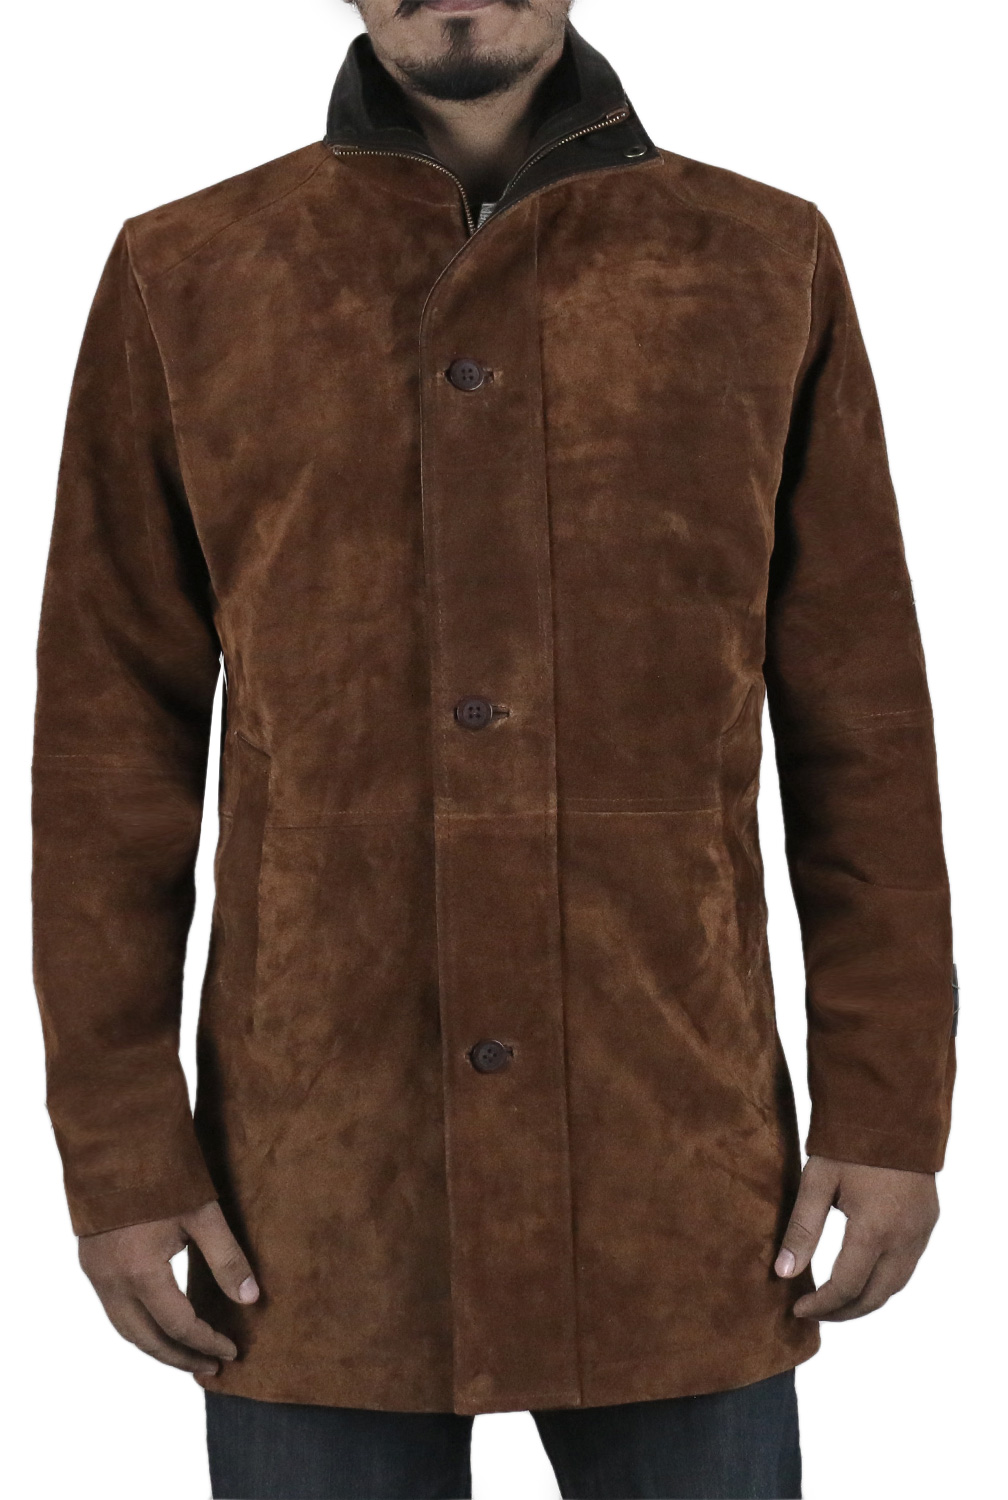 Laverapelle Mens Brown Genuine Cow Suede Leather Coat - 1502774 | eBay